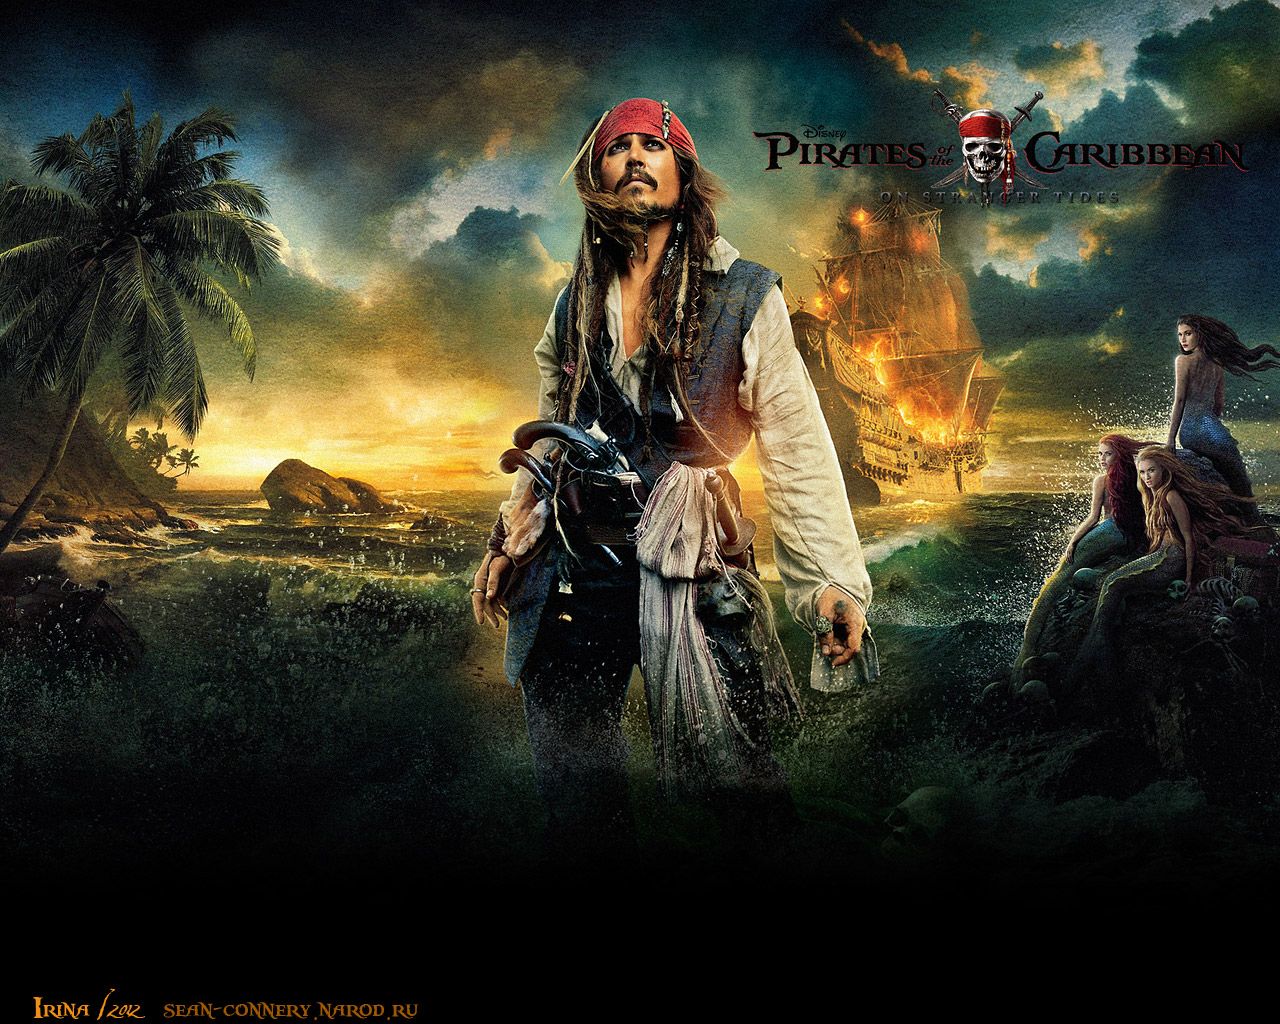 POTC wallpaper - fondo de pantalla de Pirati dei Caraibi (32949178) - fanpop